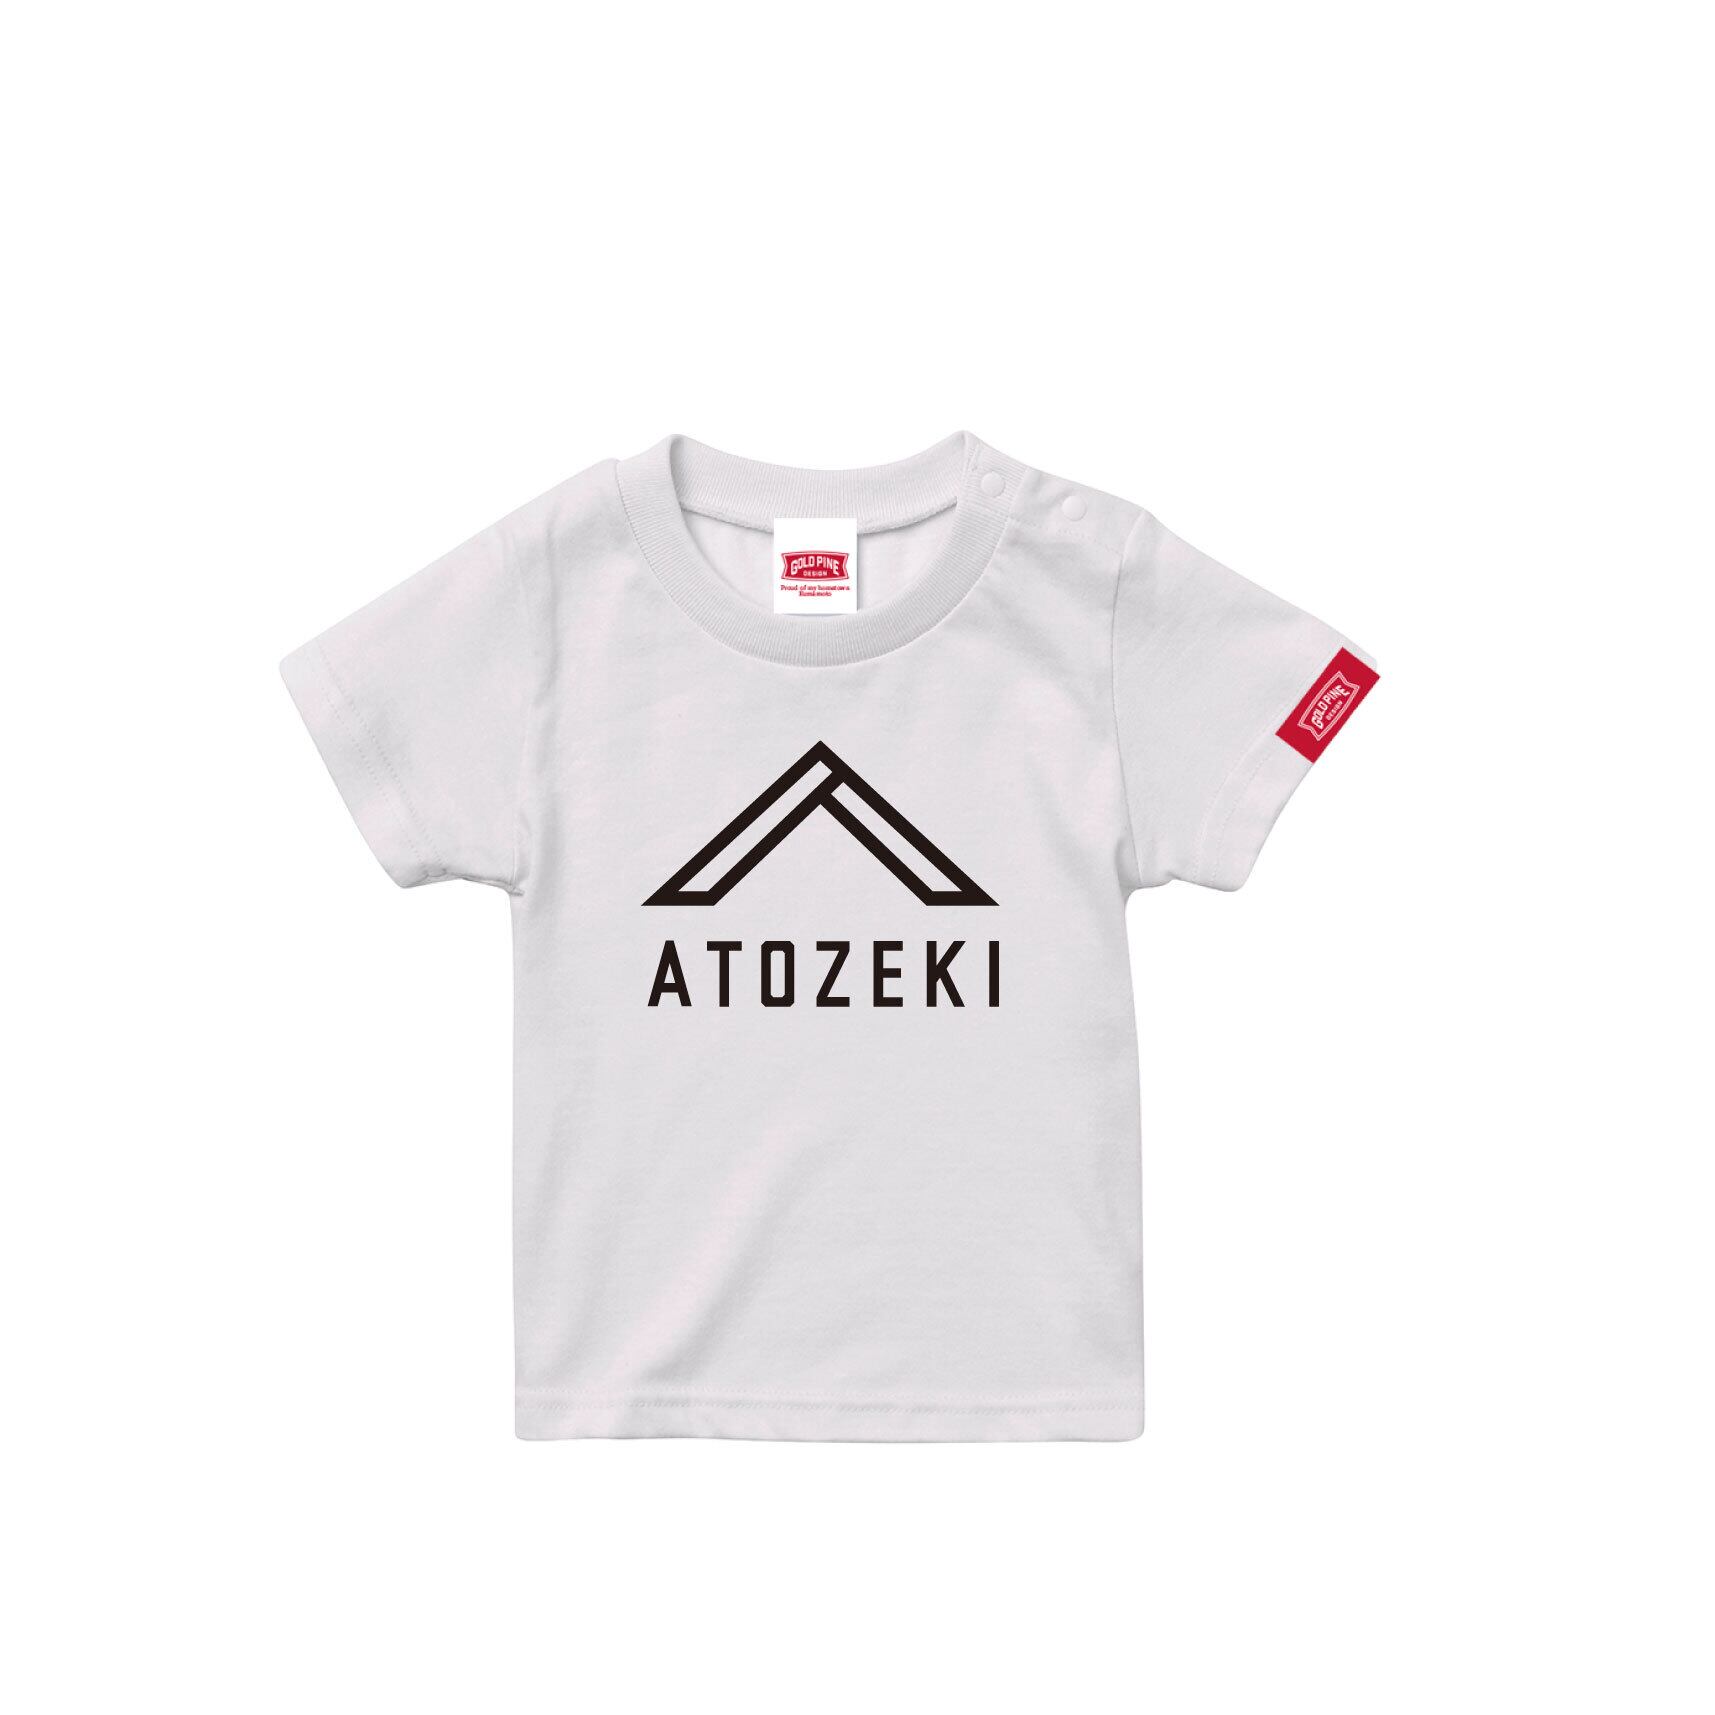 ATOZEKI-Tshirt【Kids】White